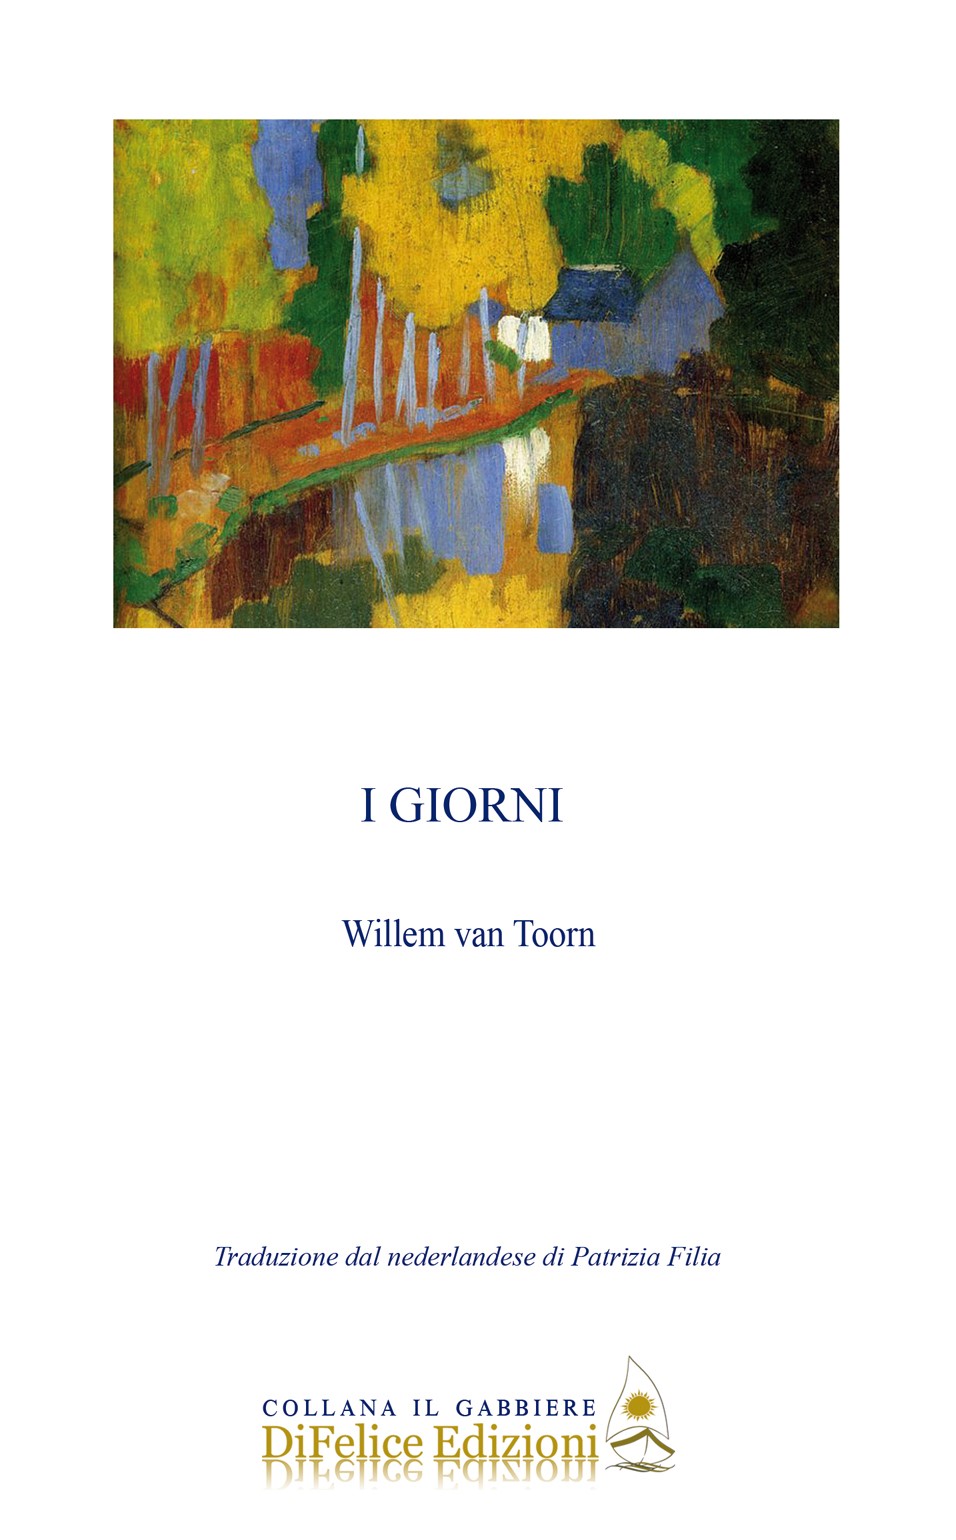 Willem van Toorn, I GIORNI